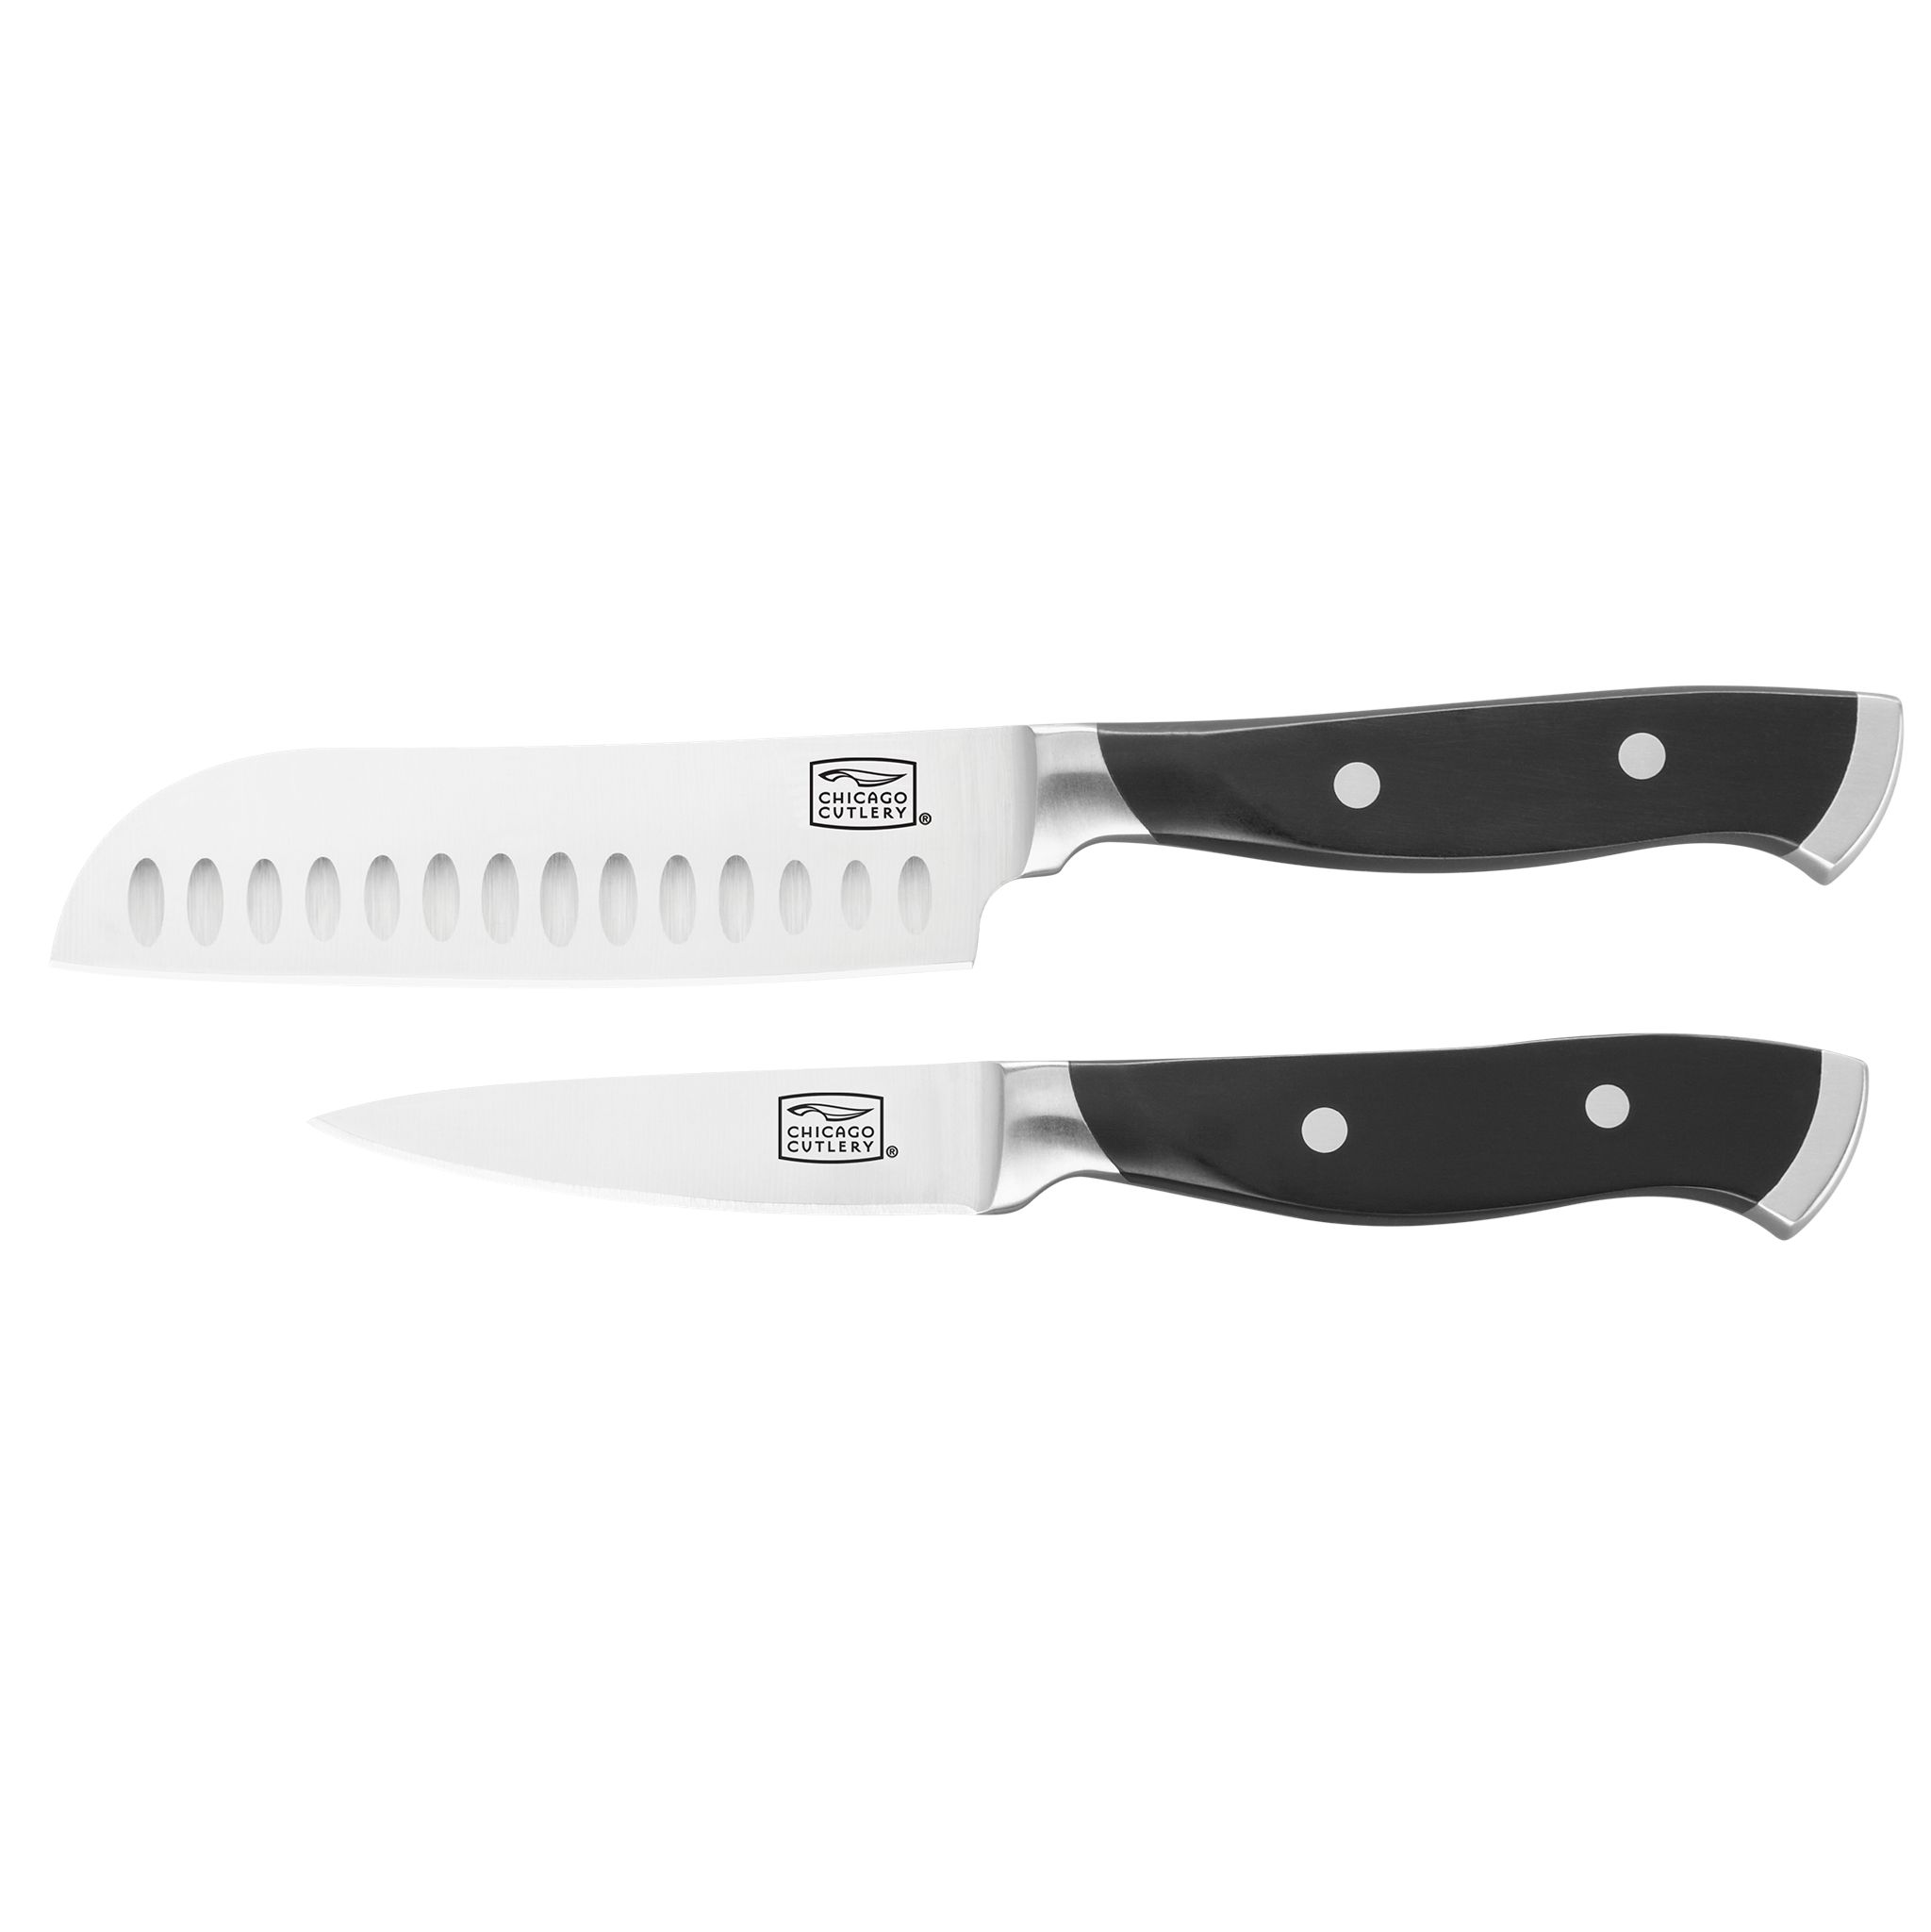 Chicago Cutlery Armitage Kitchen Knife Set Black - Blade HQ